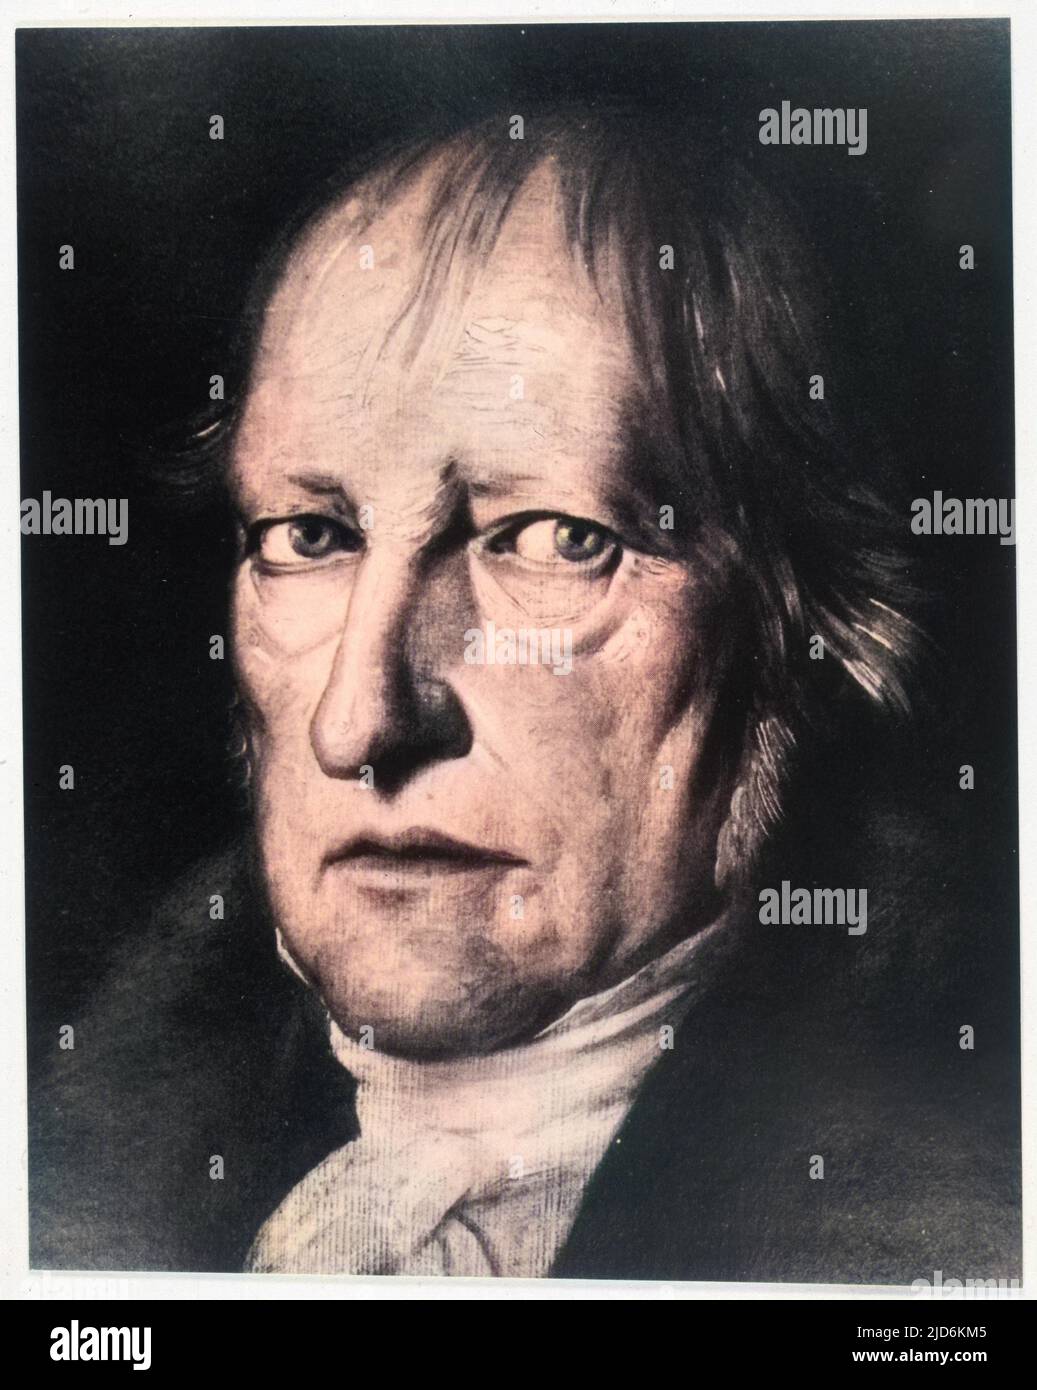 GEORG WILHELM FRIEDRICH HEGEL German philosopher Colourised version of: 10062888       Date: 1770 - 1830 Stock Photo